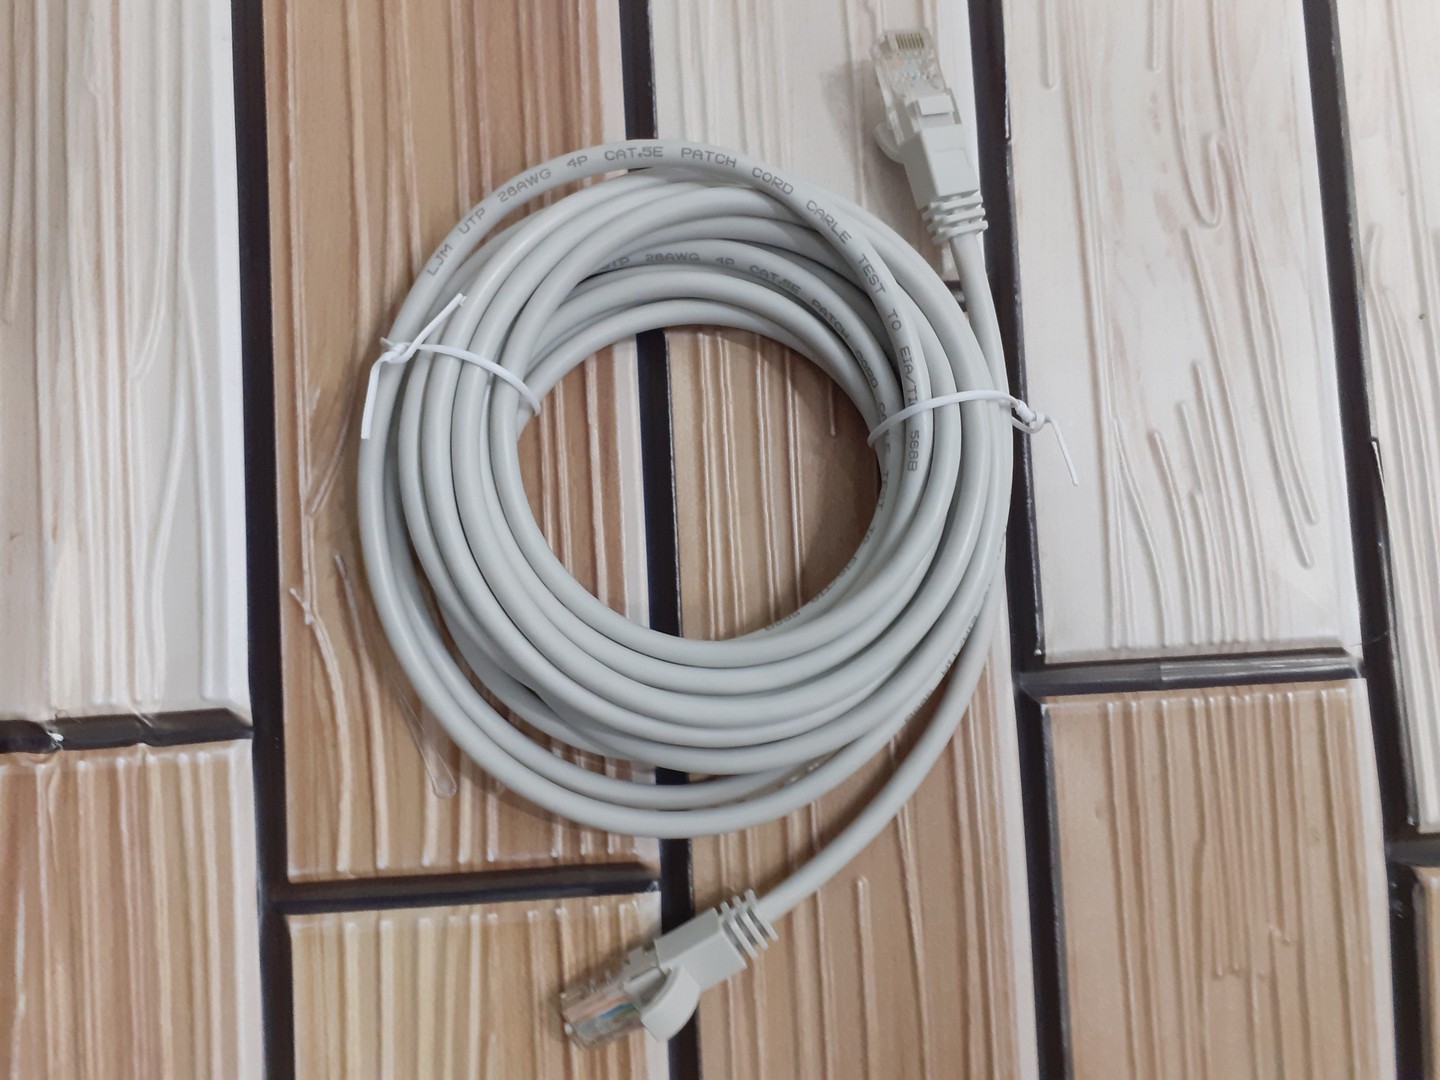 accesorios para electronica - Cable de red - Cable UTP Pacth Cord Categoría CAT5e 4.5M 15ft 2